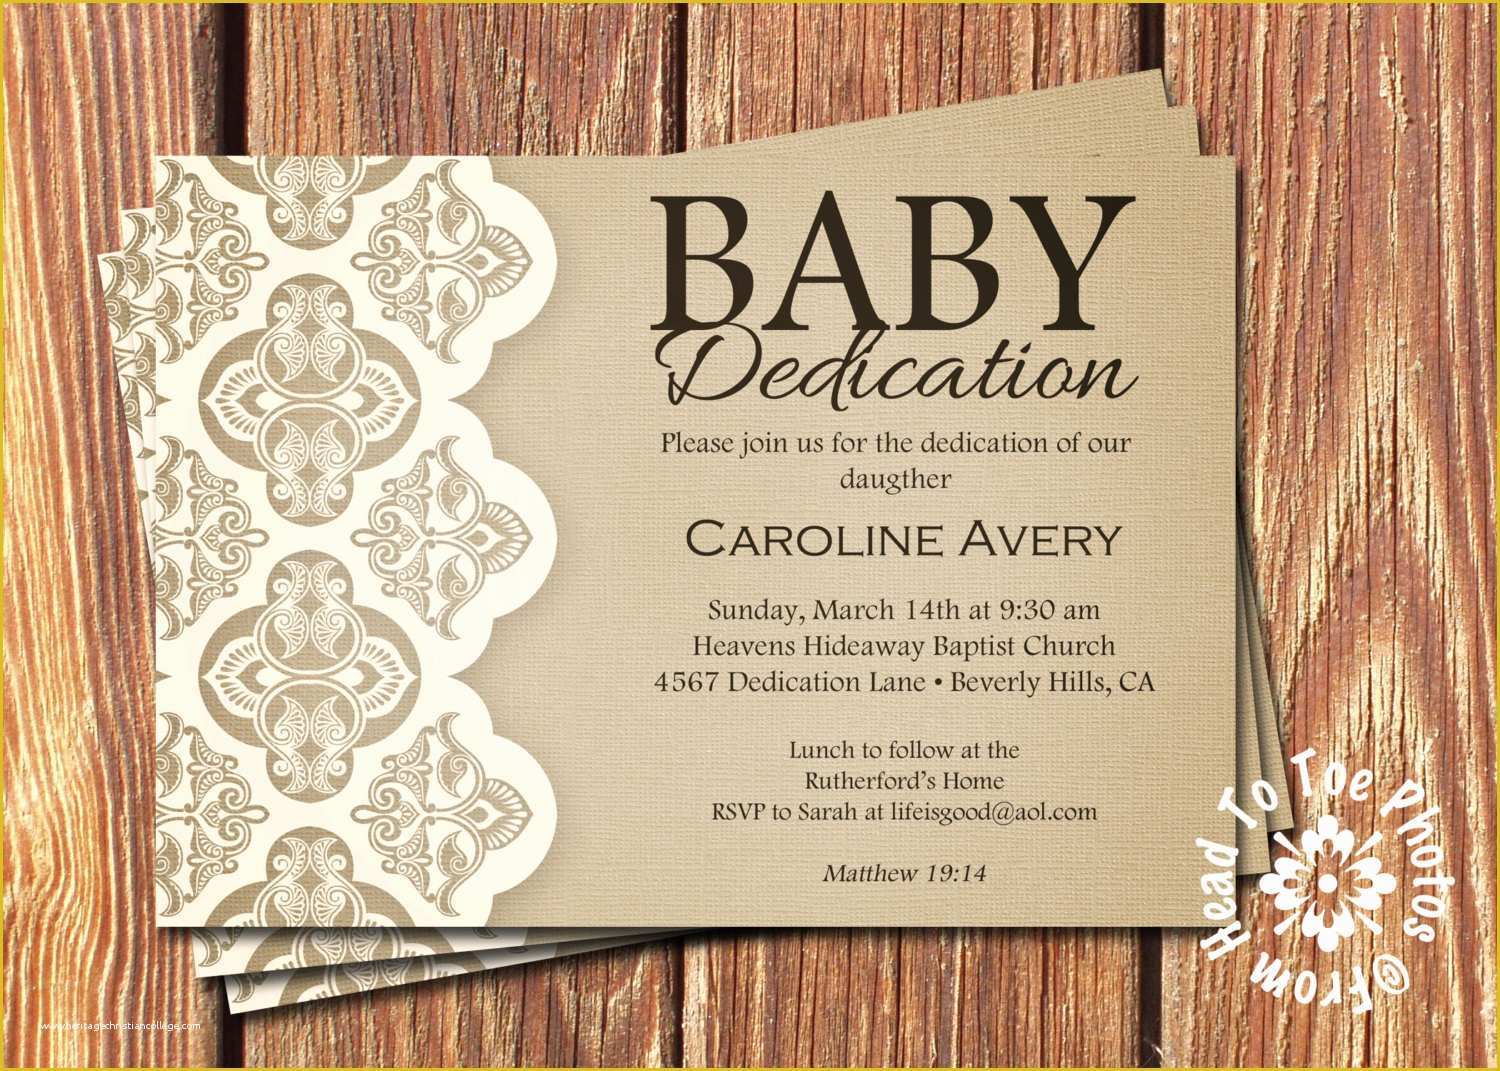 Baby Dedication Invitations Free Template Of Baby Dedication Invitation Wordi and Church Dedication